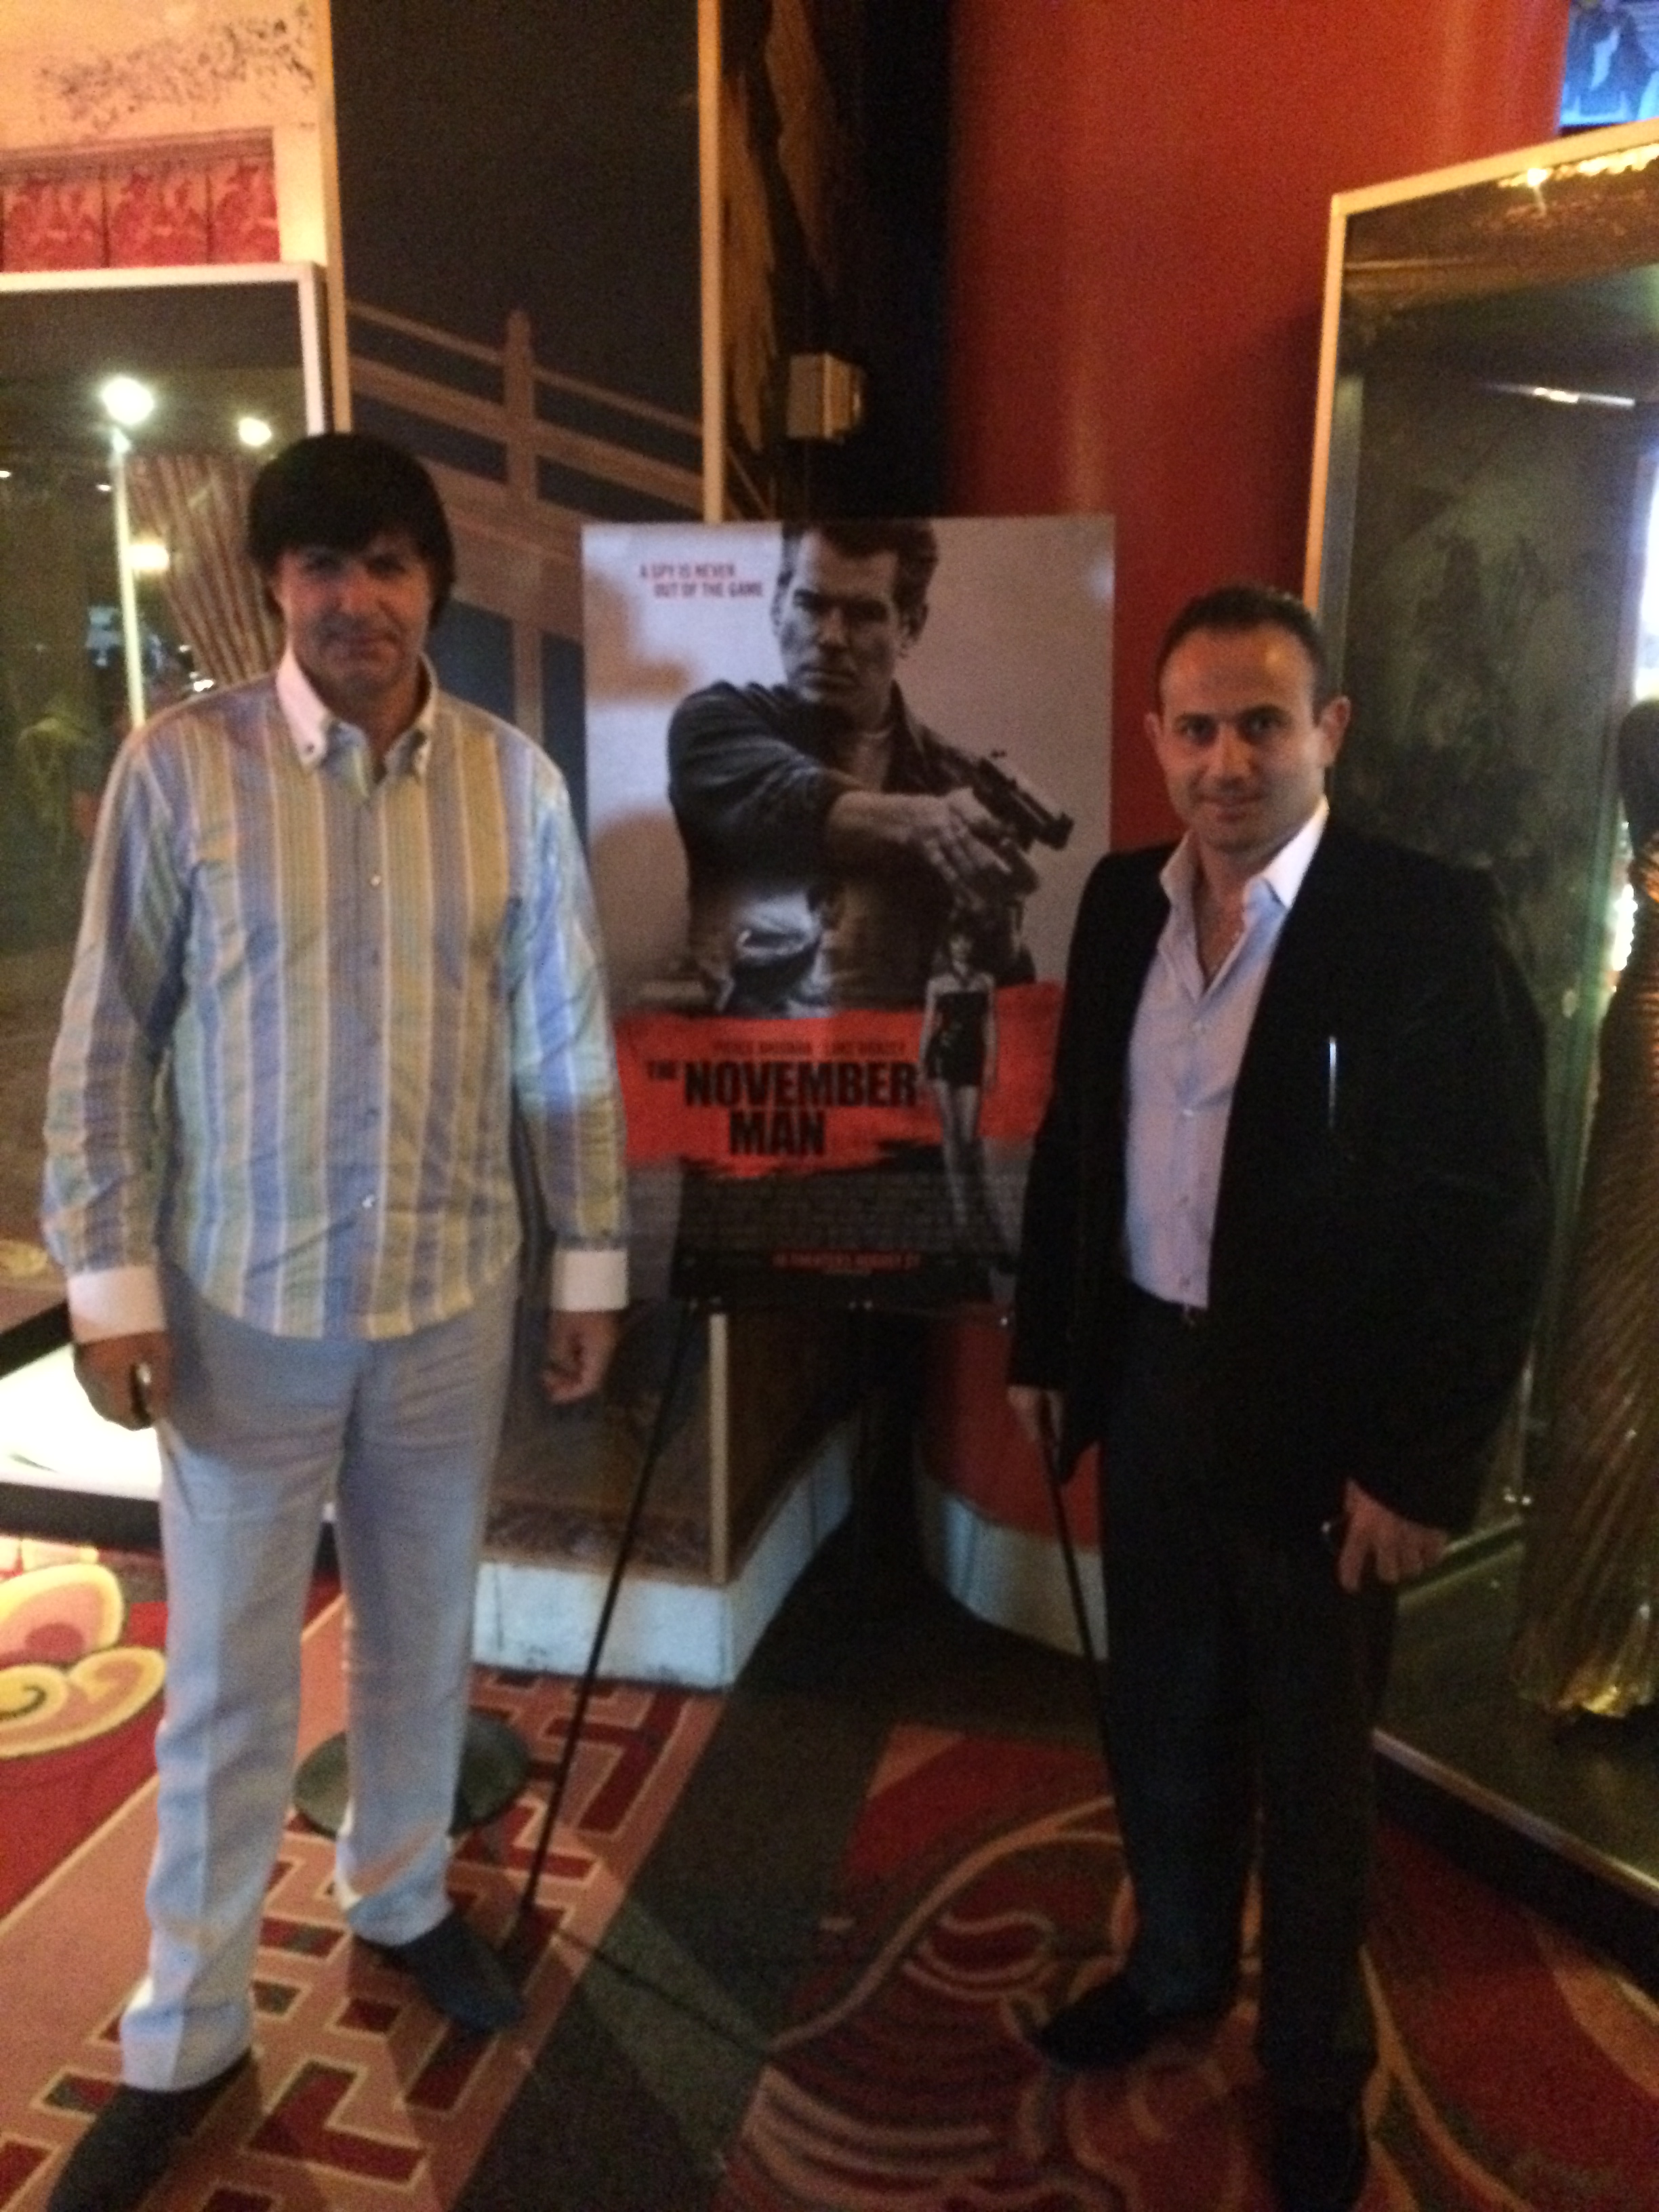 Roman Mitichyan with executive producer Stepan Martirosyan at premiere of The November Man starring Pierce Brosnan.